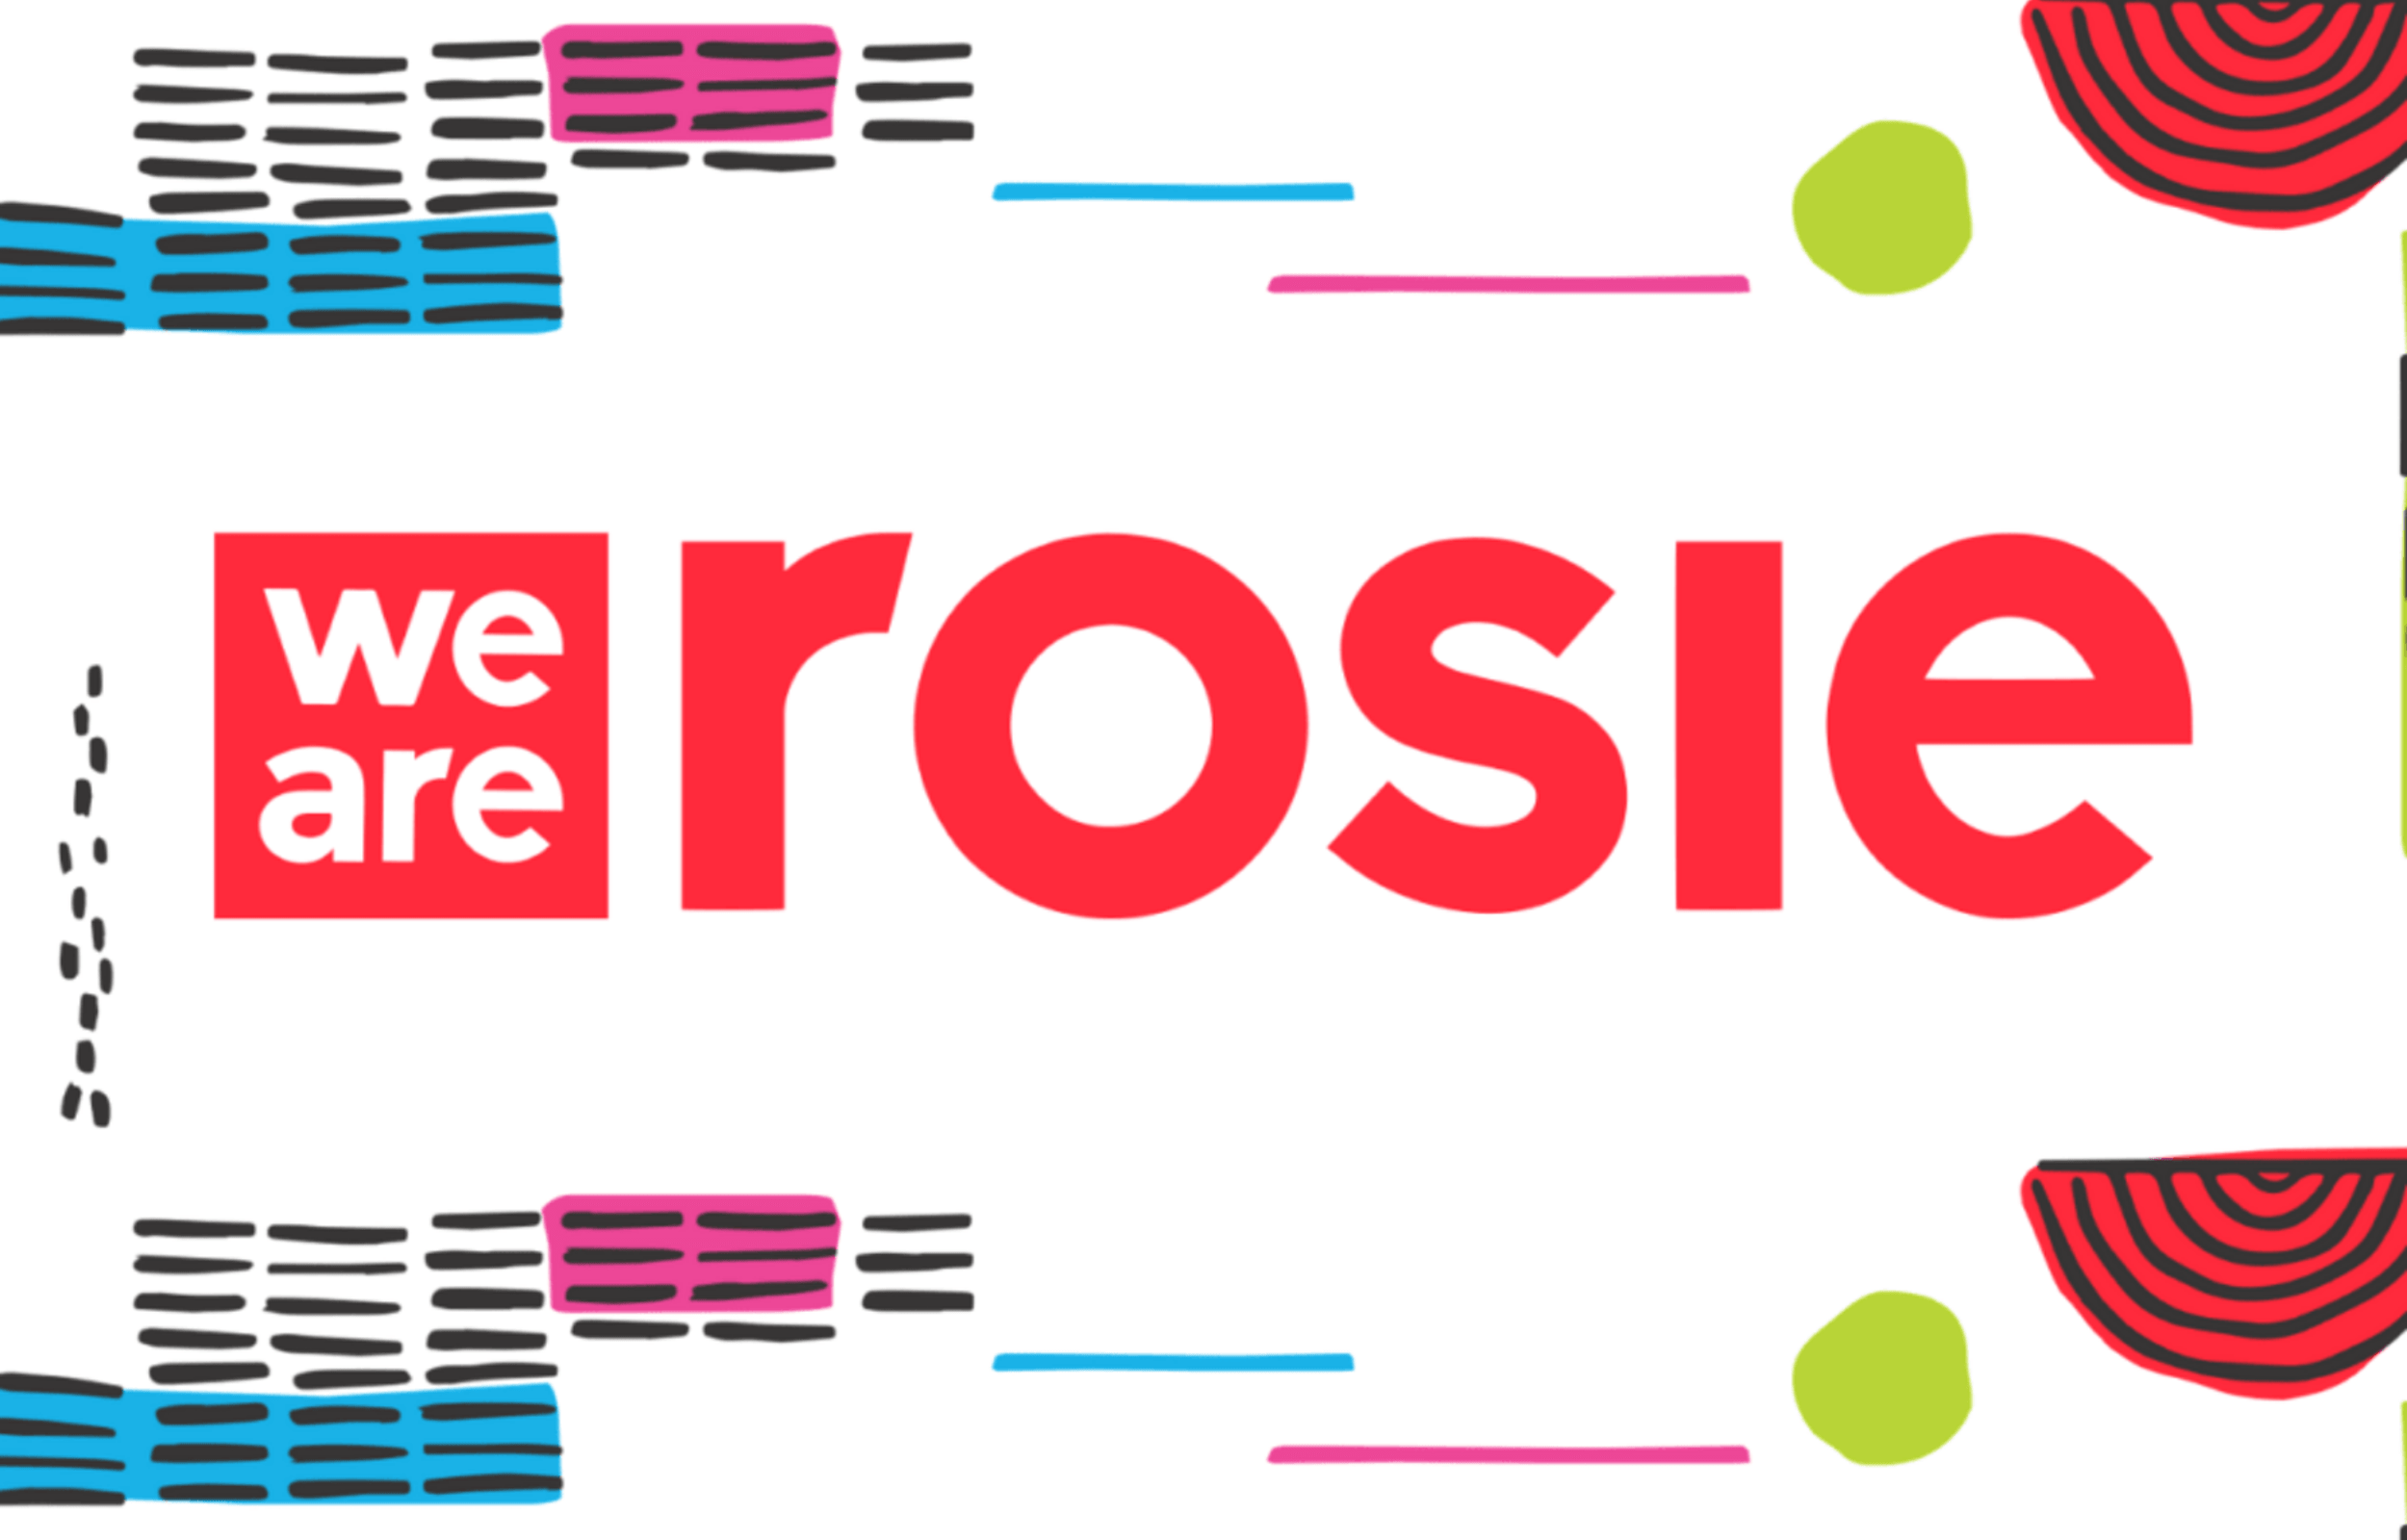 We Are Rosie logo